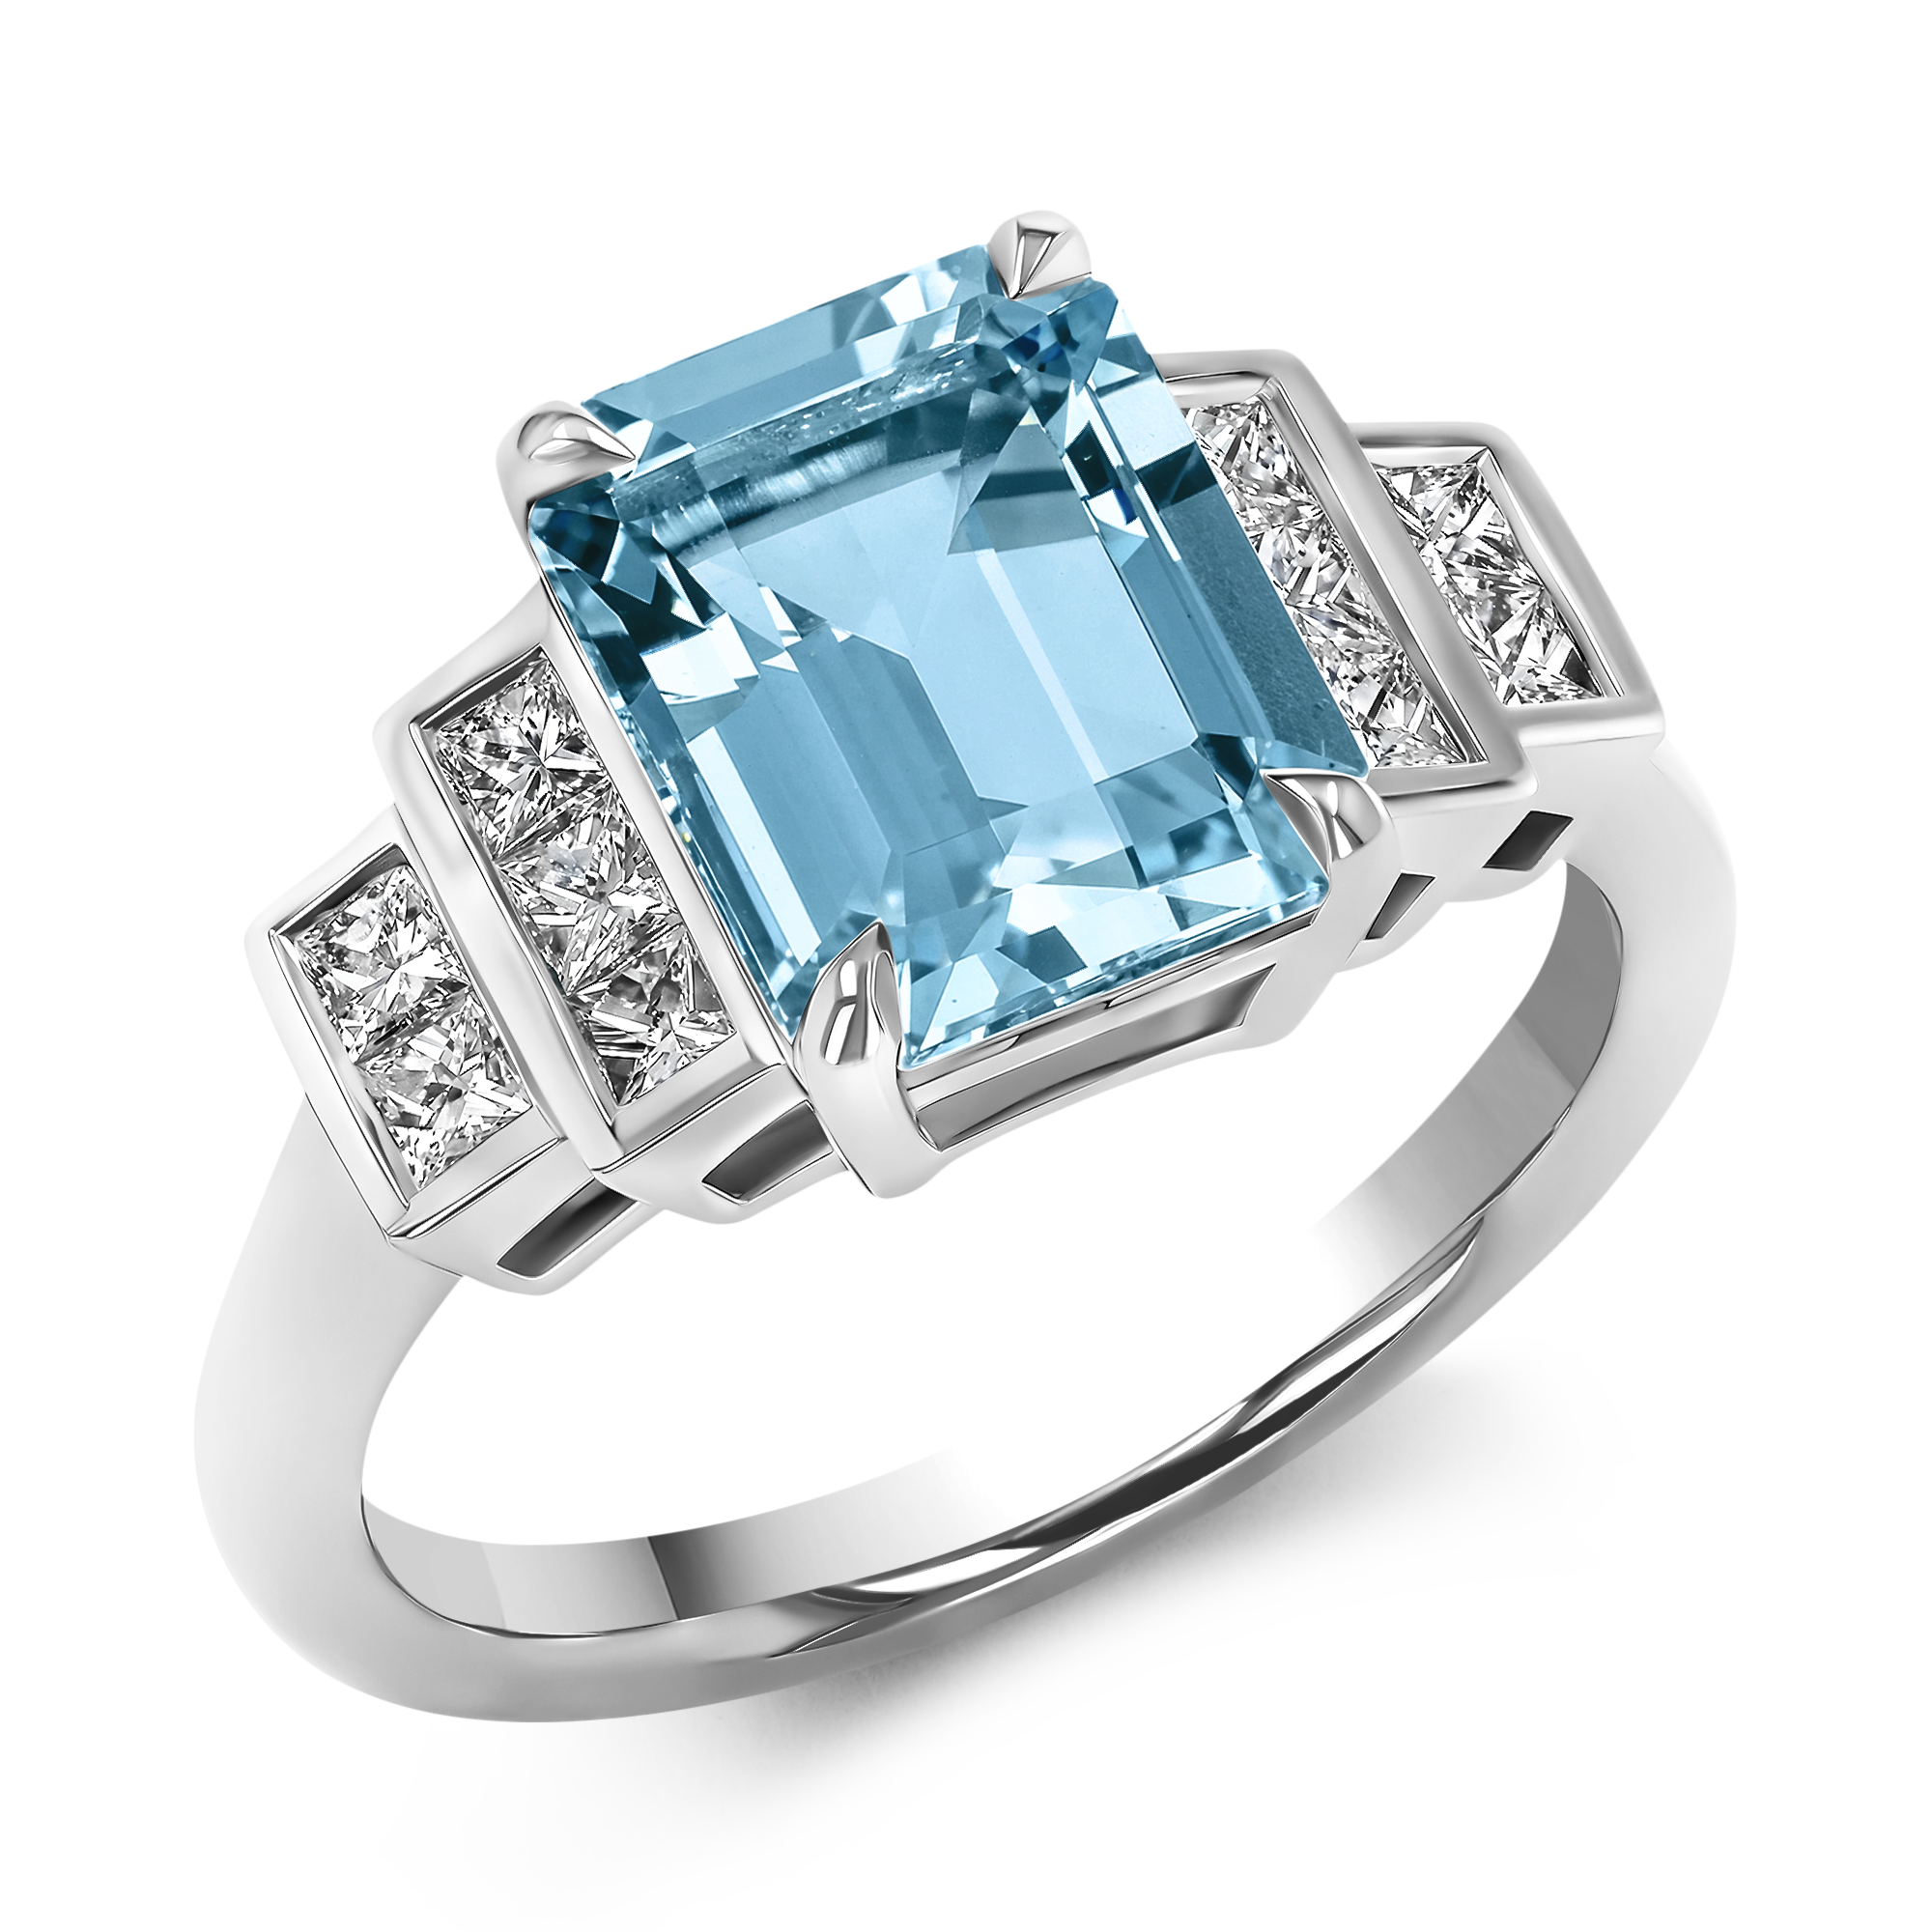 Lukusuzi 2.75ct Art Deco Inspired Aquamarine and Diamond Ring Emerald Cut, Claw Set_1